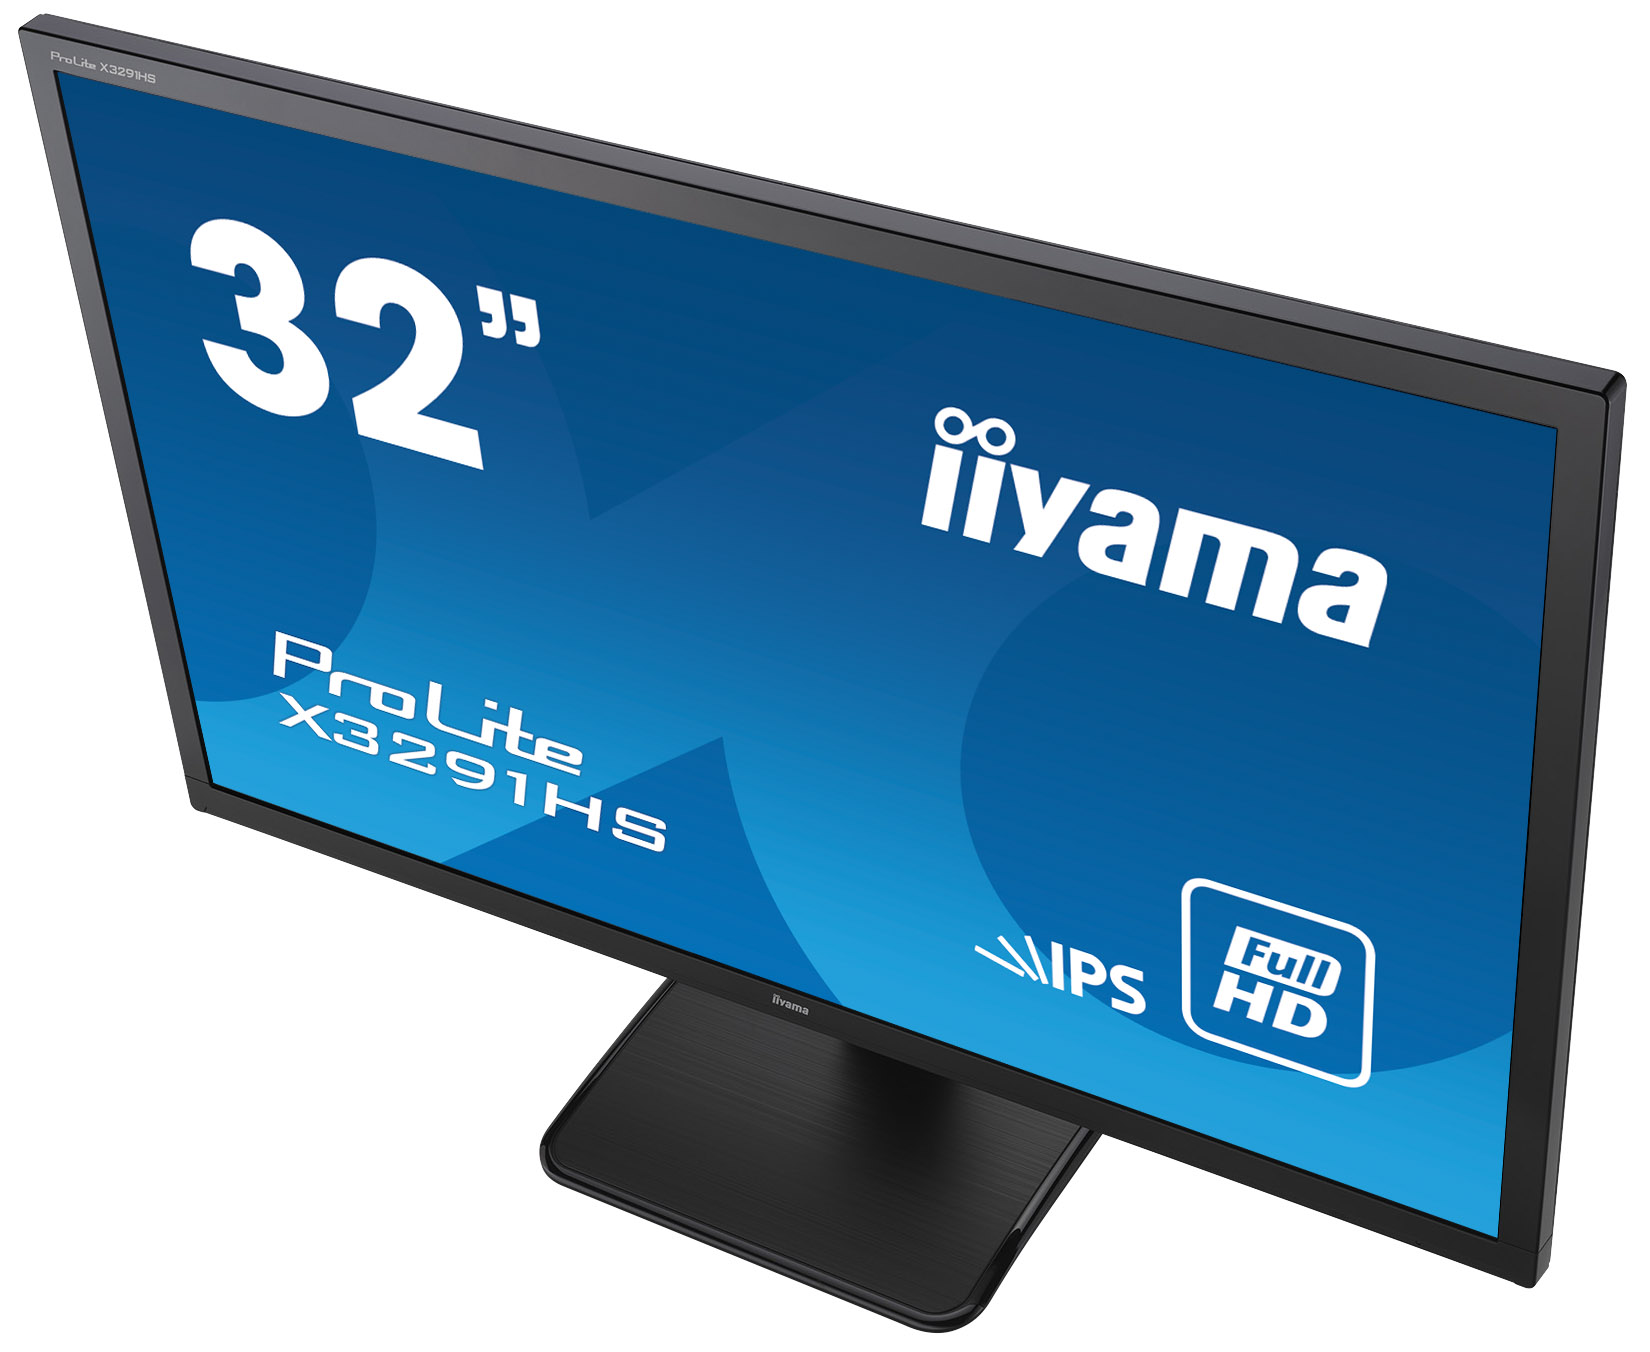 Iiyama ProLite X3291HS-B1 | 32" (80,1cm) | Full HD Monitor